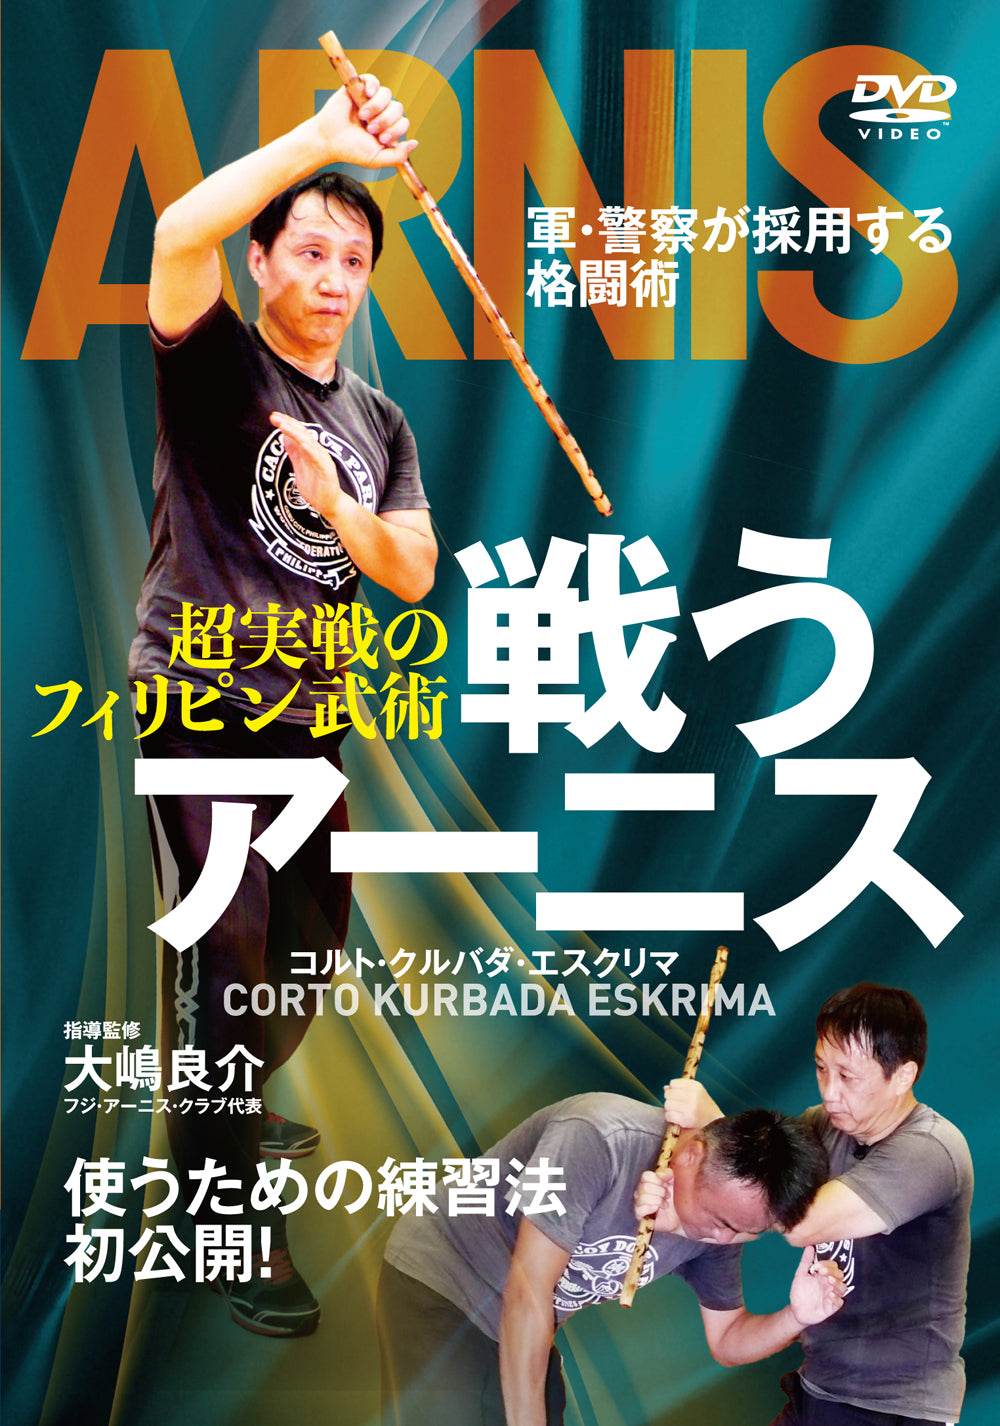 Arnis Corto Kurbada Eskrima DVD de Ryosuke Oshima